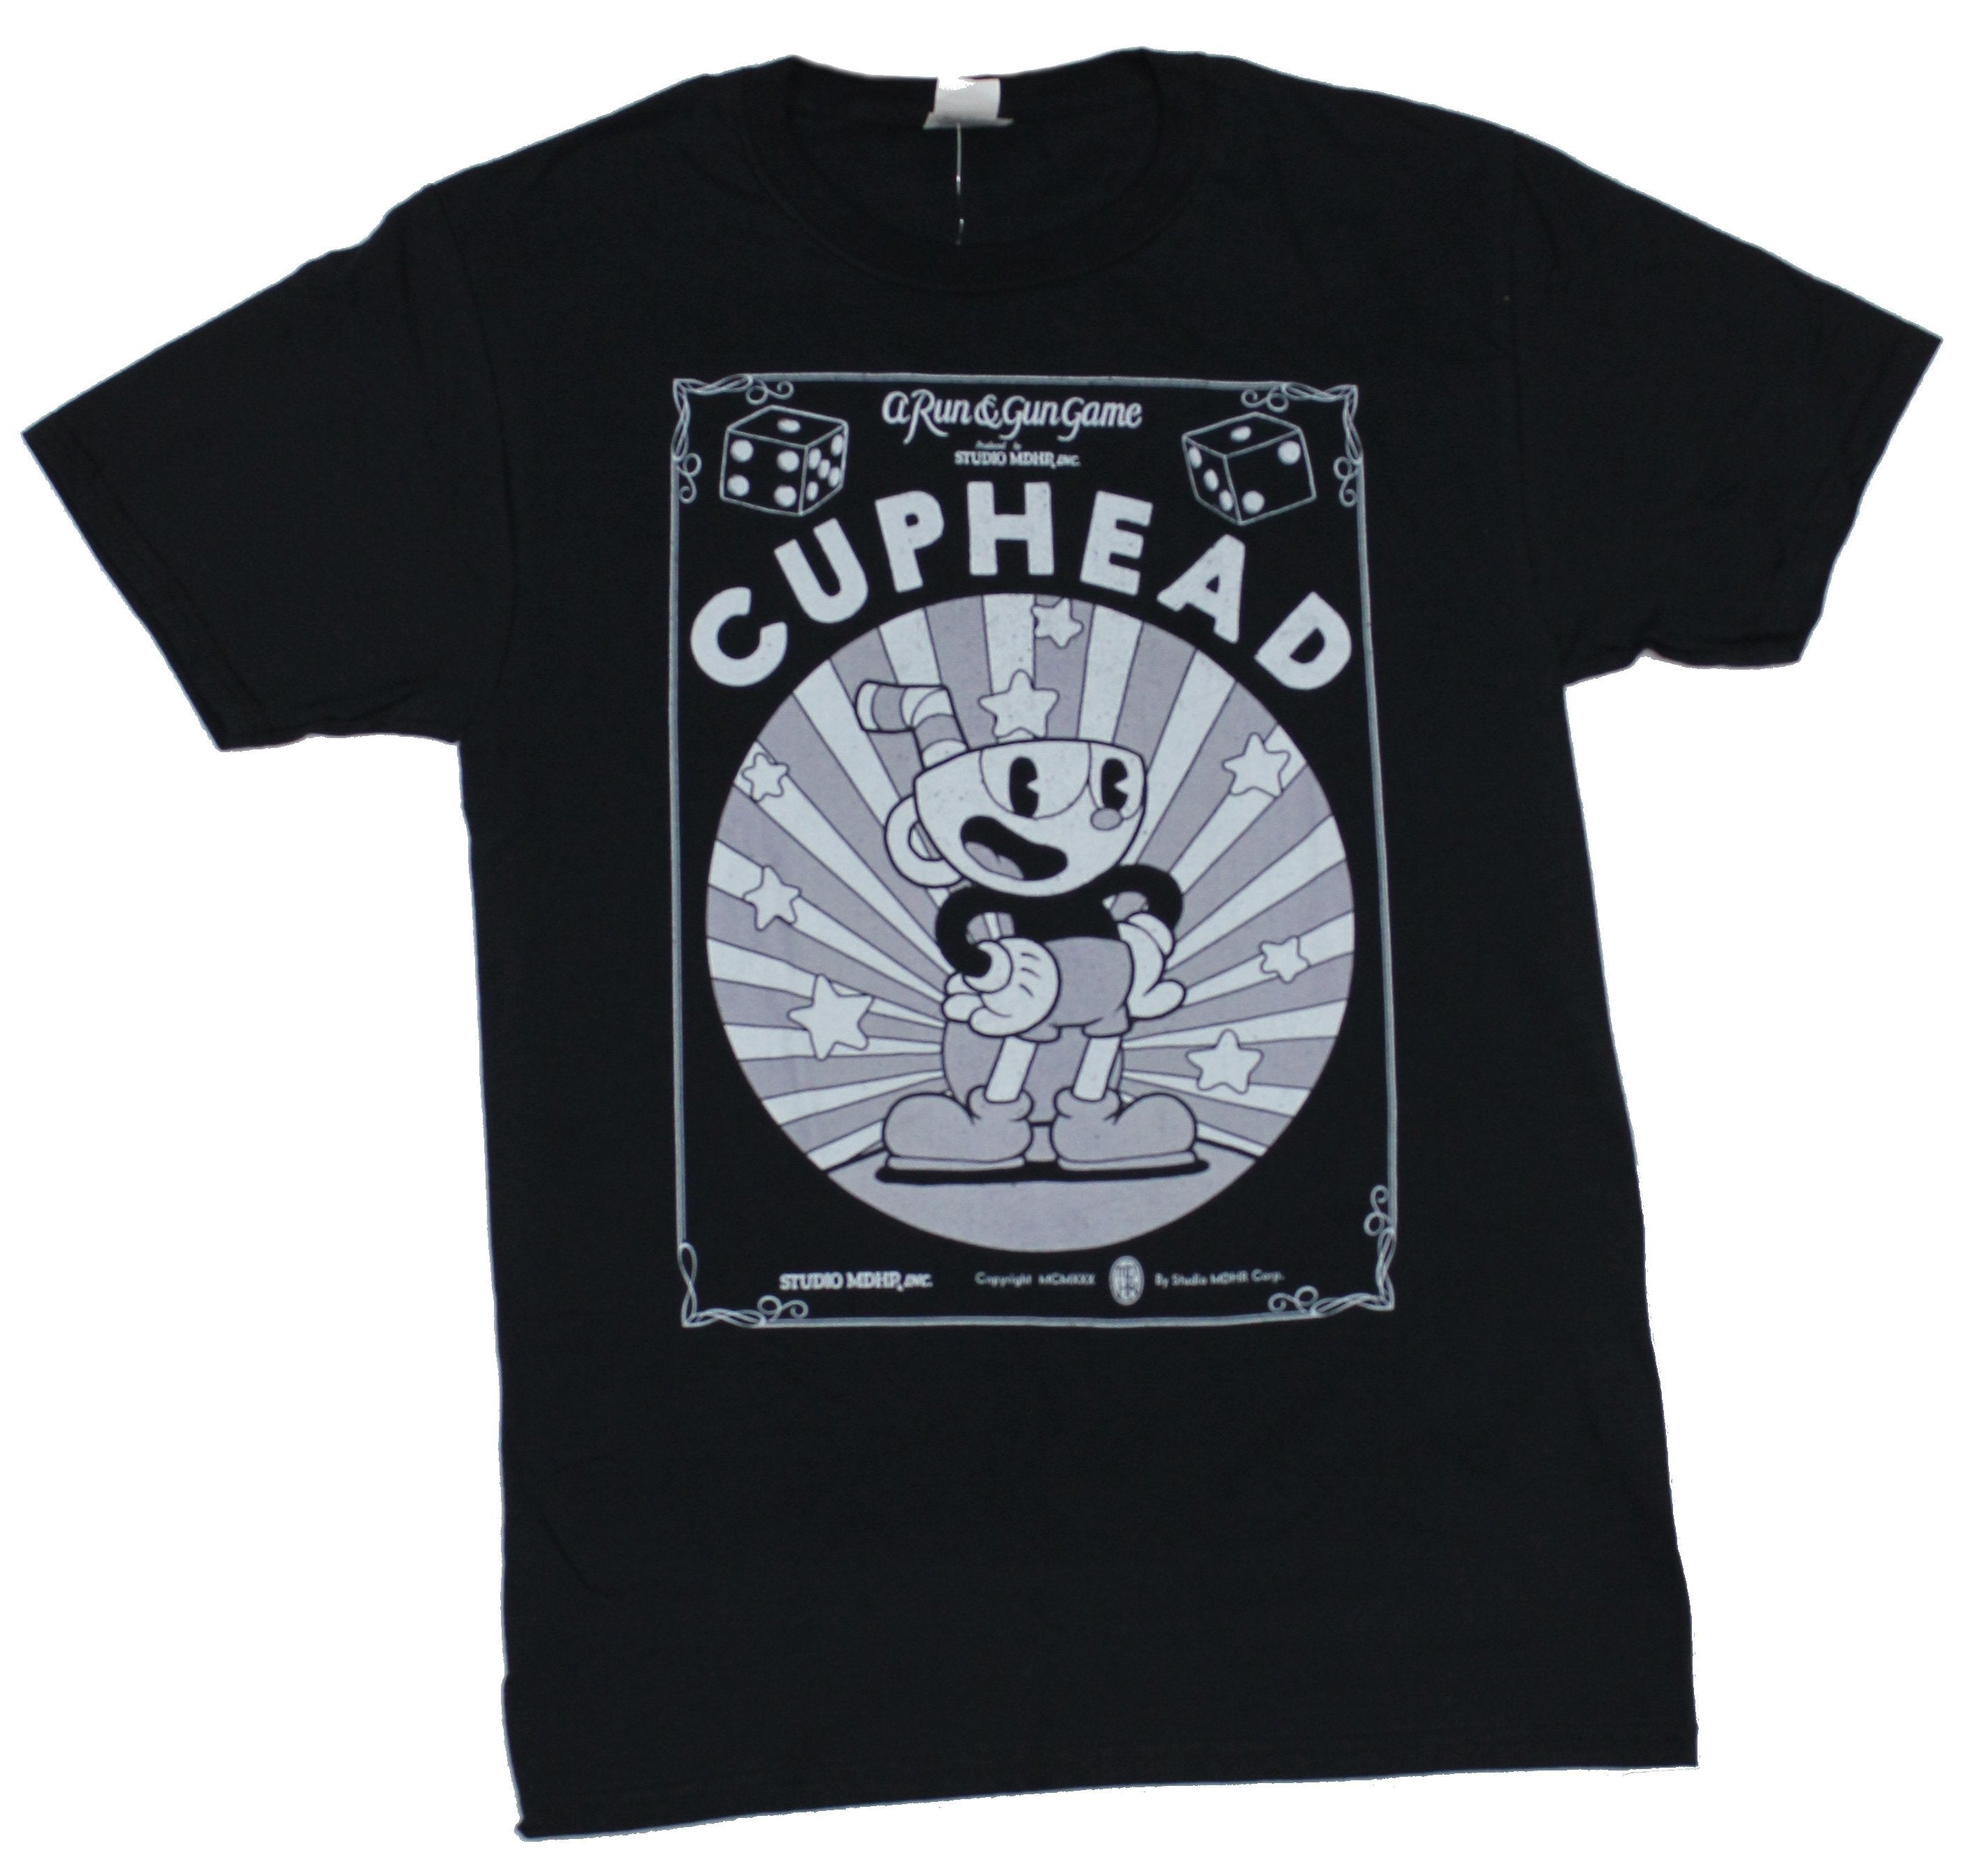 Cuphead Mens T-Shirt - A Run & Gun Game Beaming B & W Image